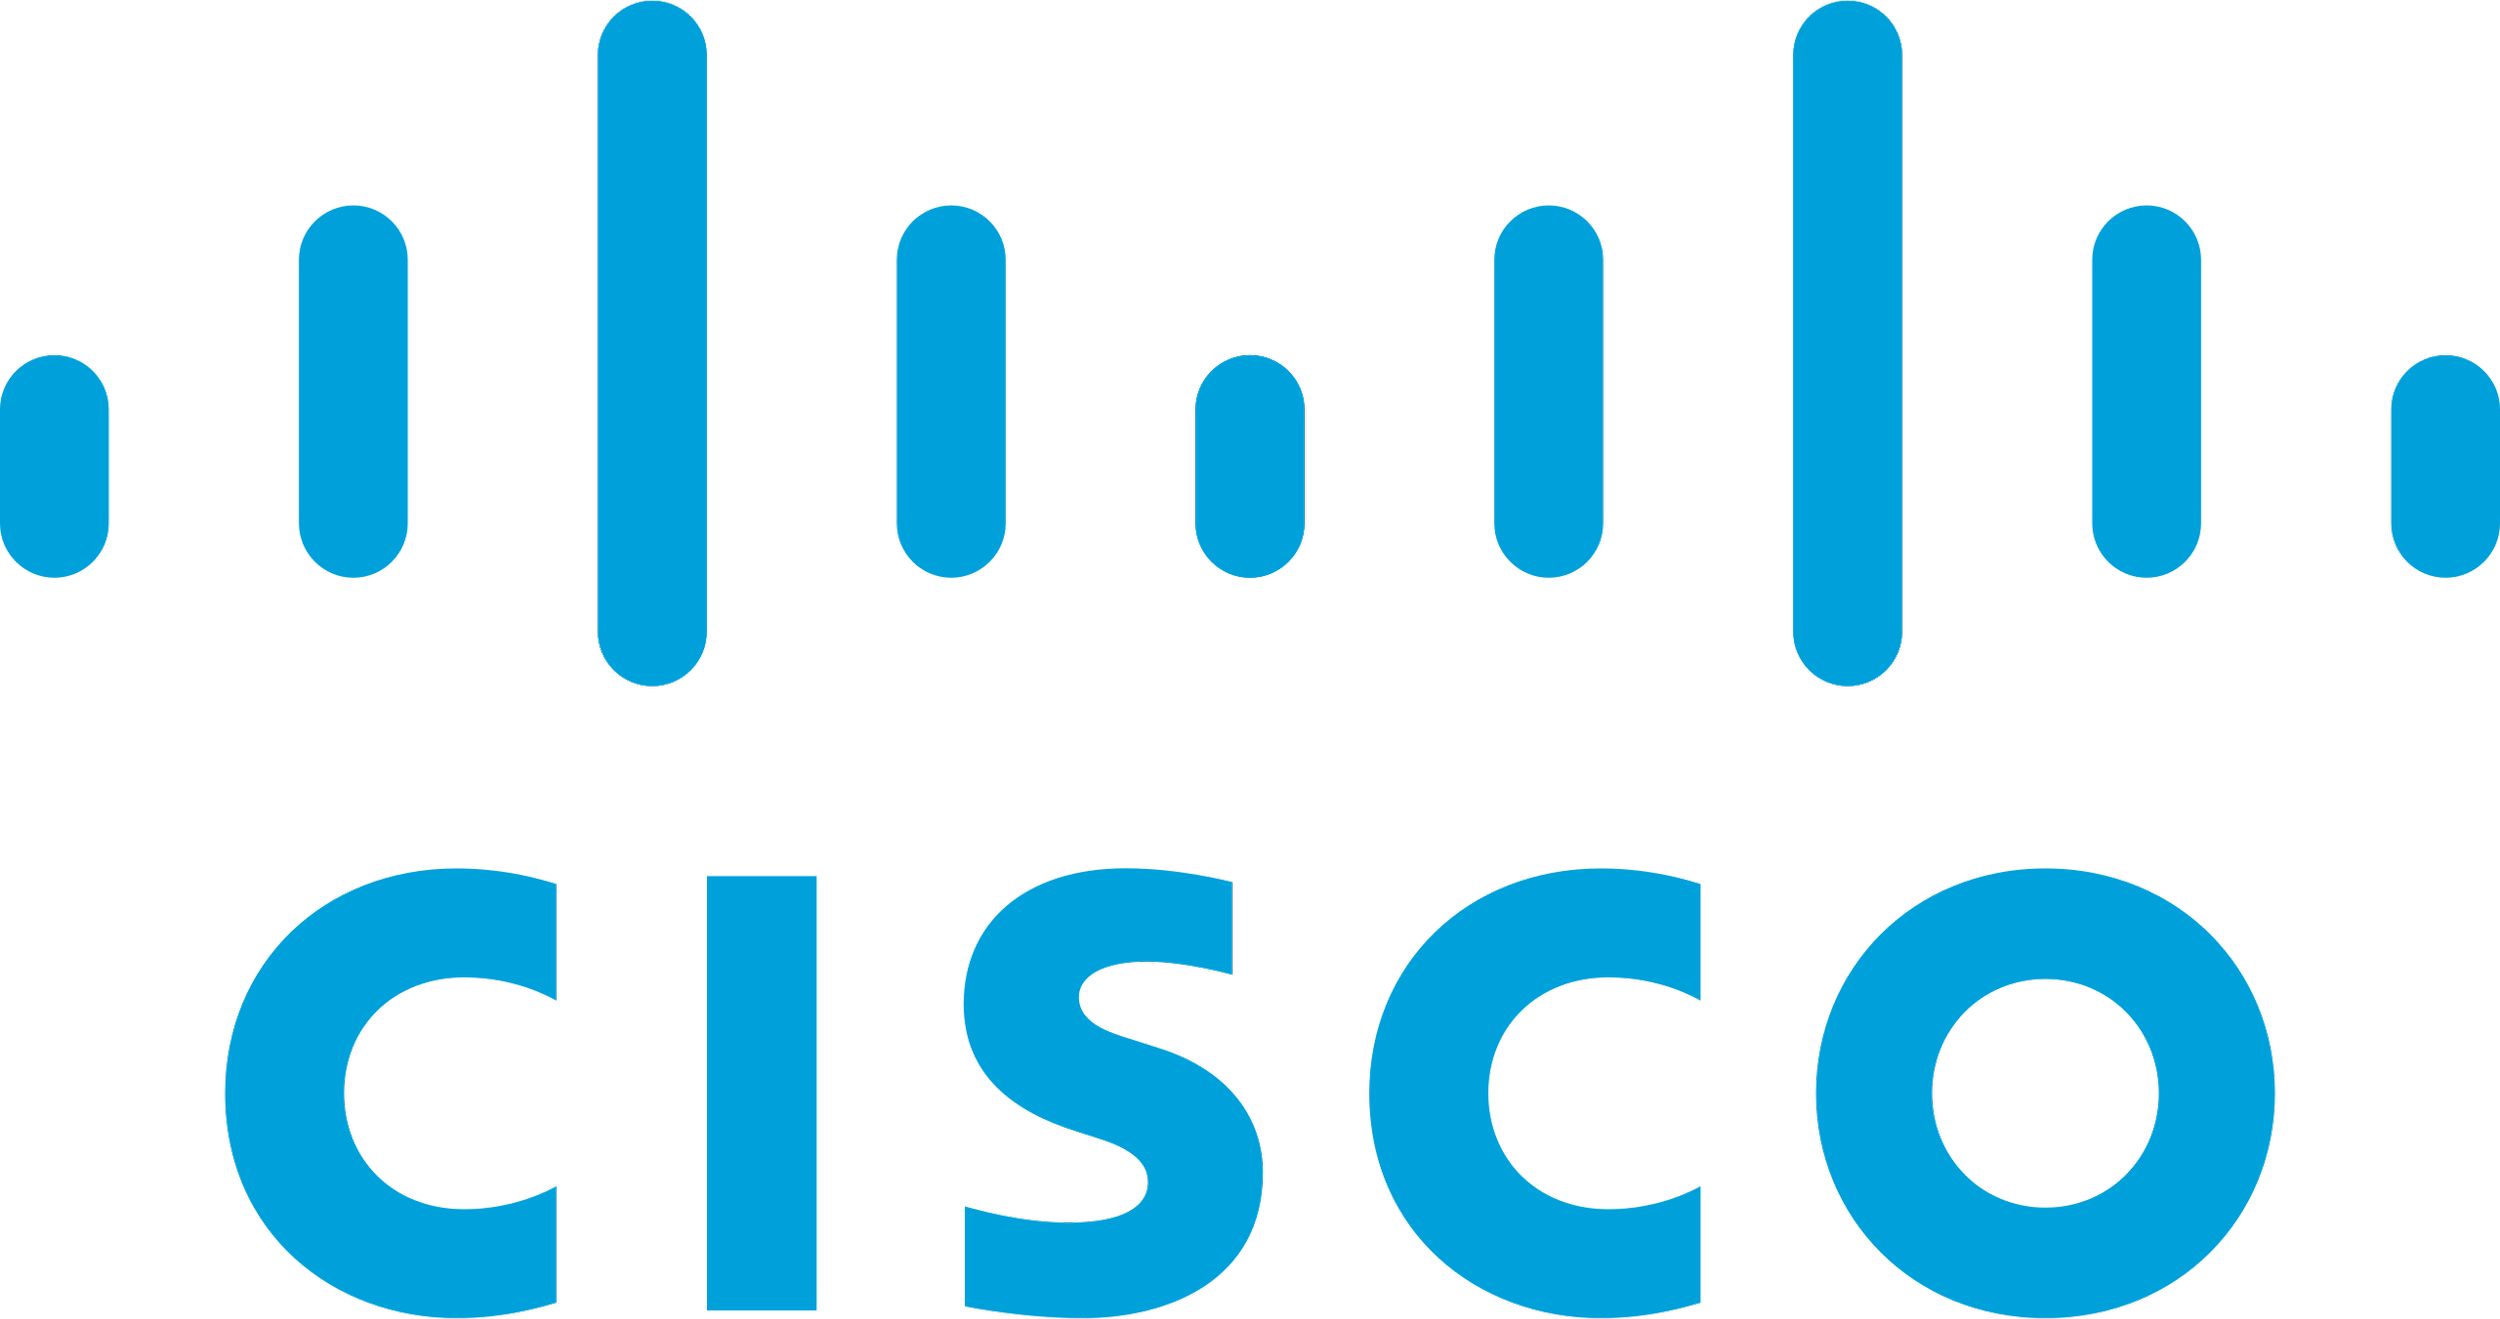 Cisco_logo_blue_2016.svg.png